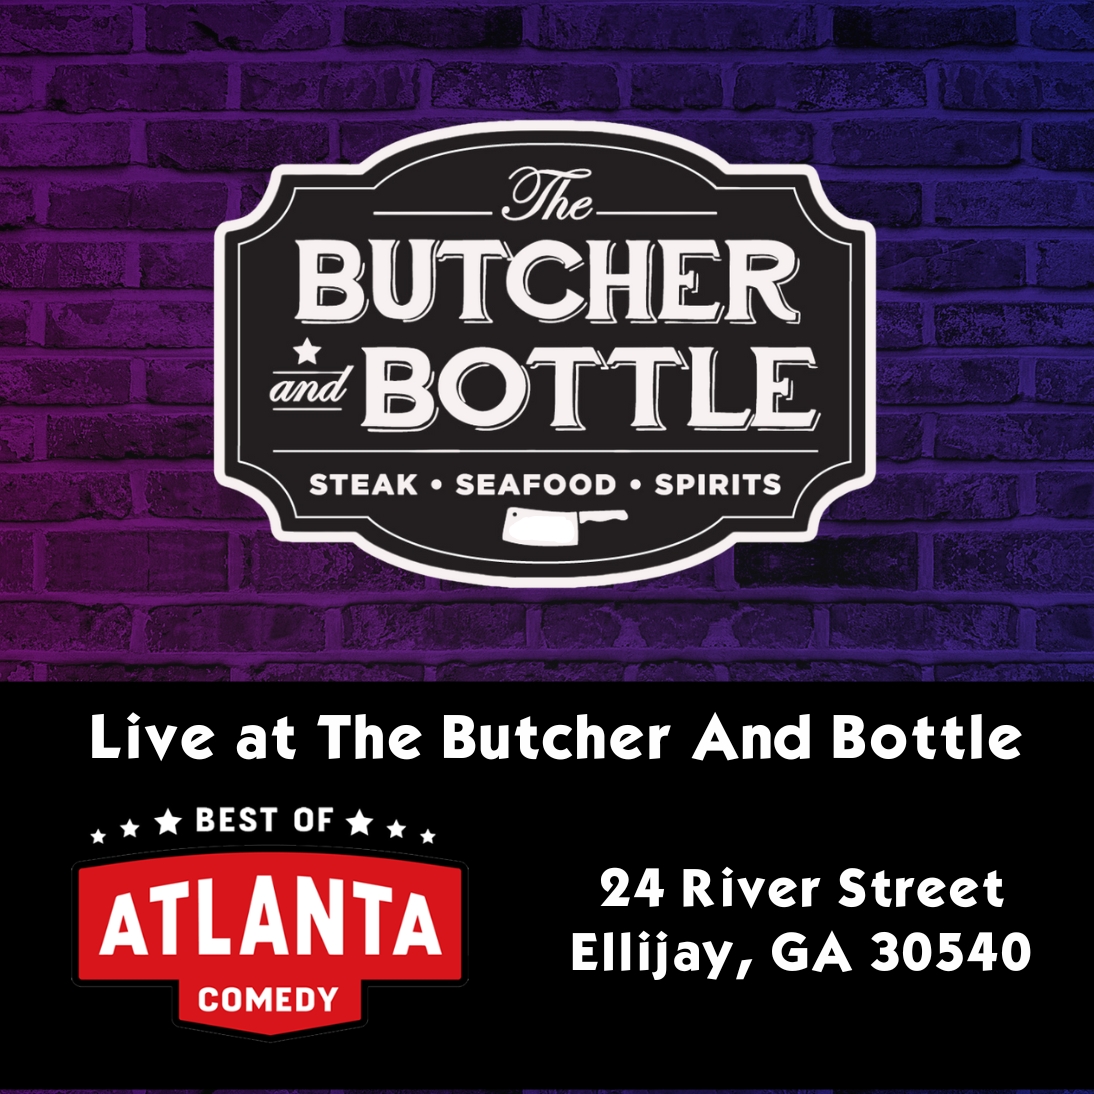 The best of Atlanta Comedy at Butcher & the Bottle in Ellijay GA